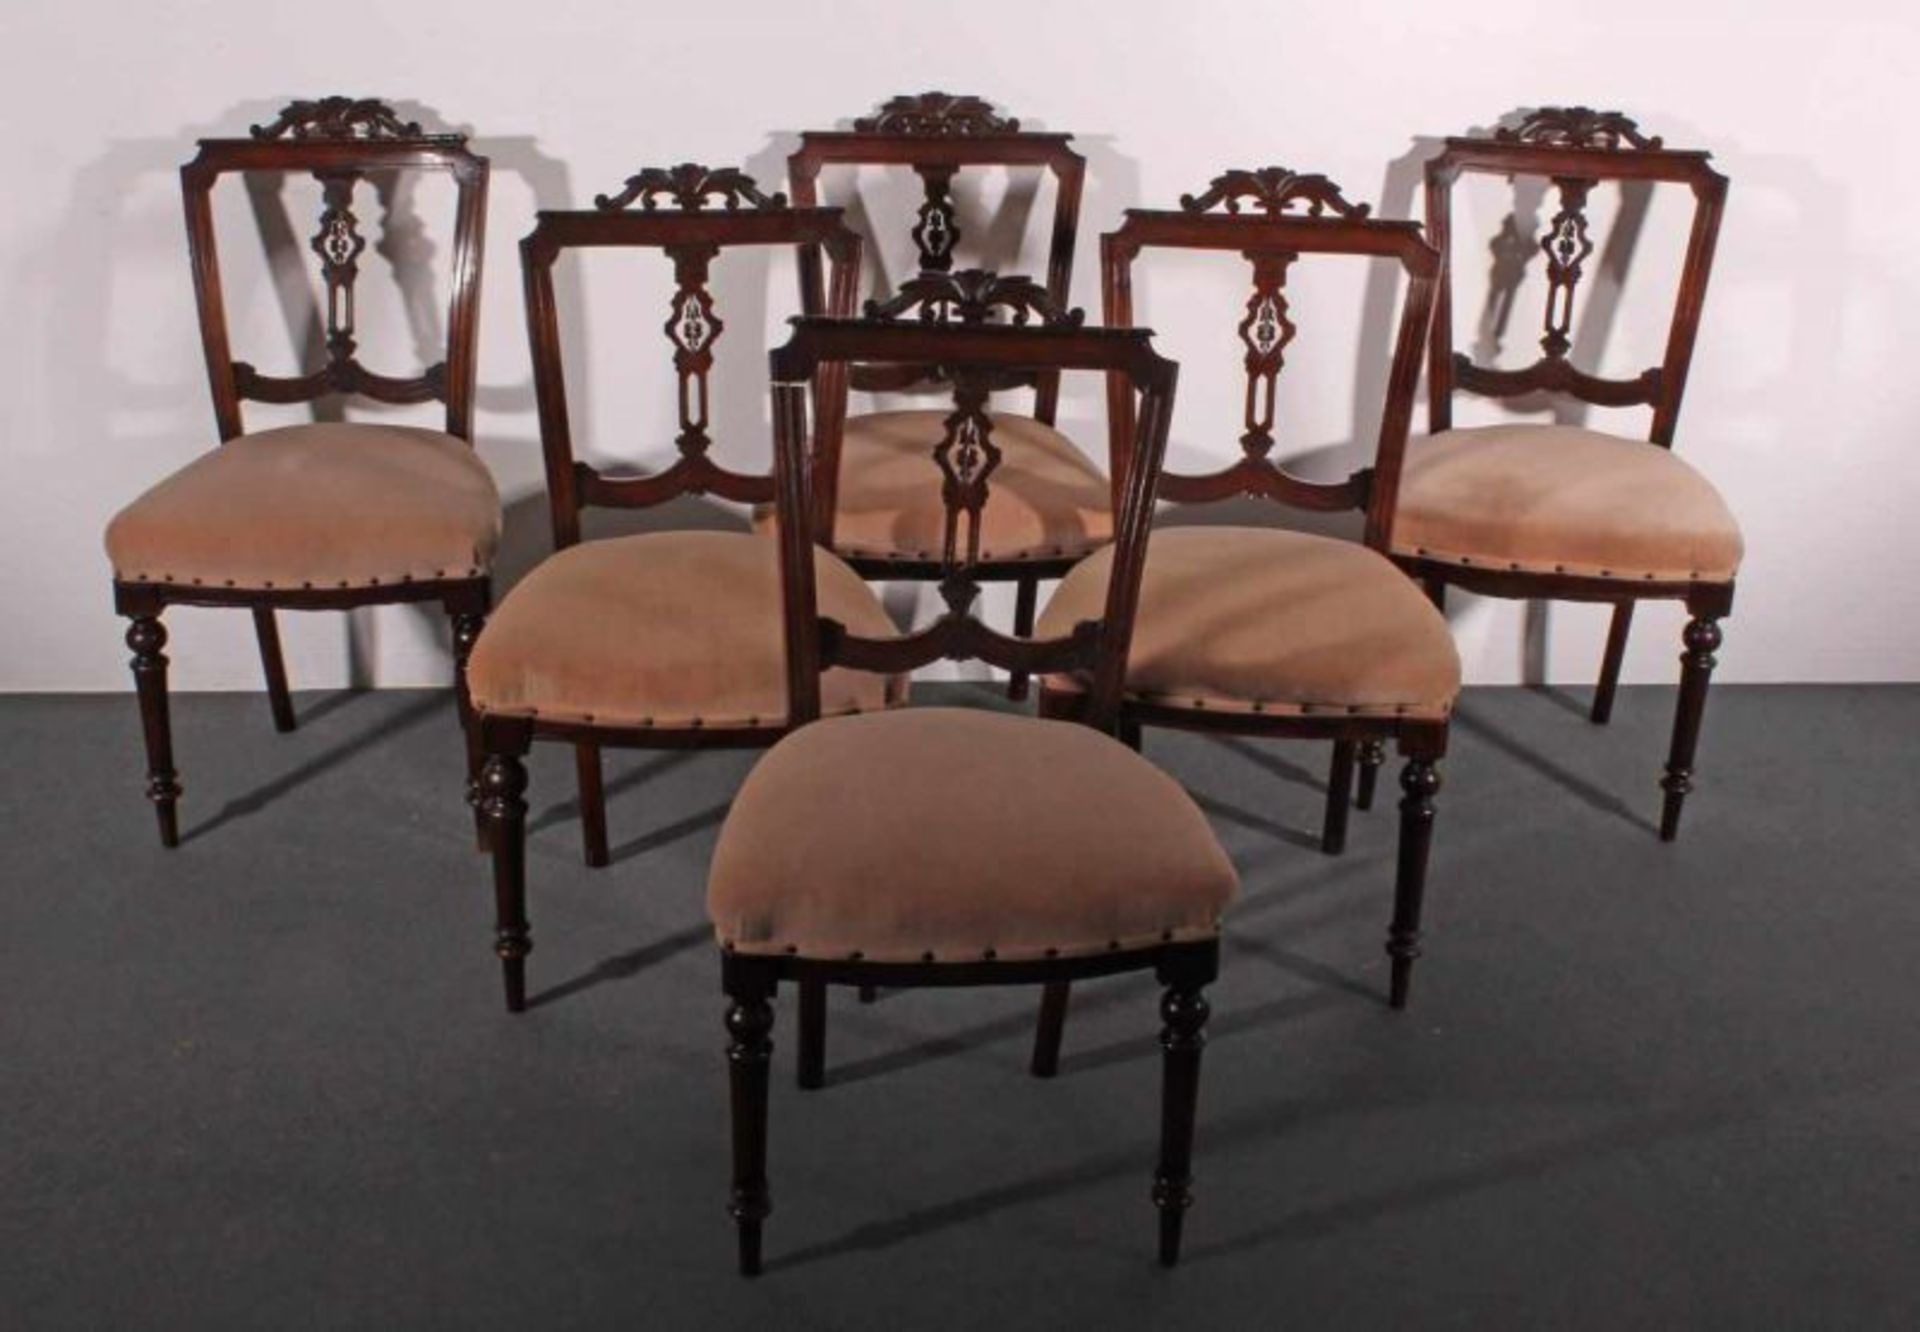 6 Stühle, England, 19. Jh., Mahagoni, Sitzpolster mit Veloursbezug 20.00 % buyer's premium on the